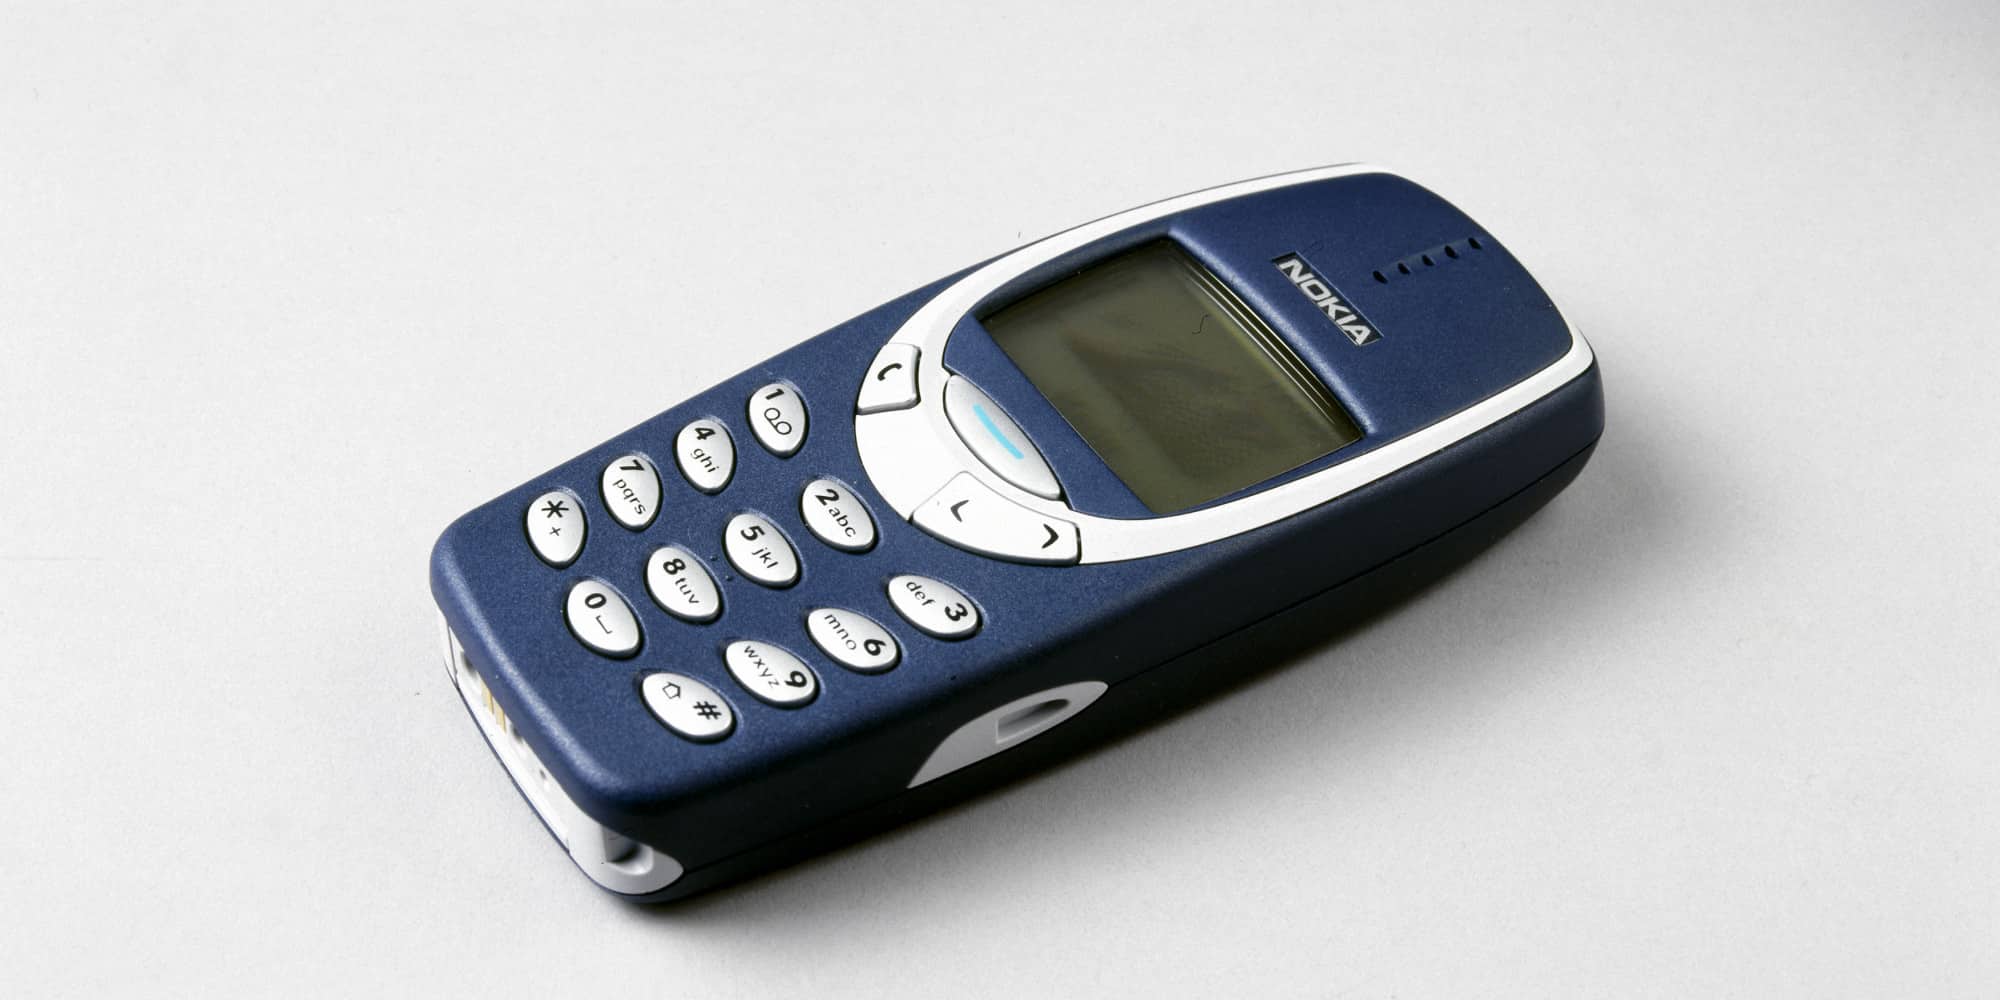 Nokia 3310 komt terug